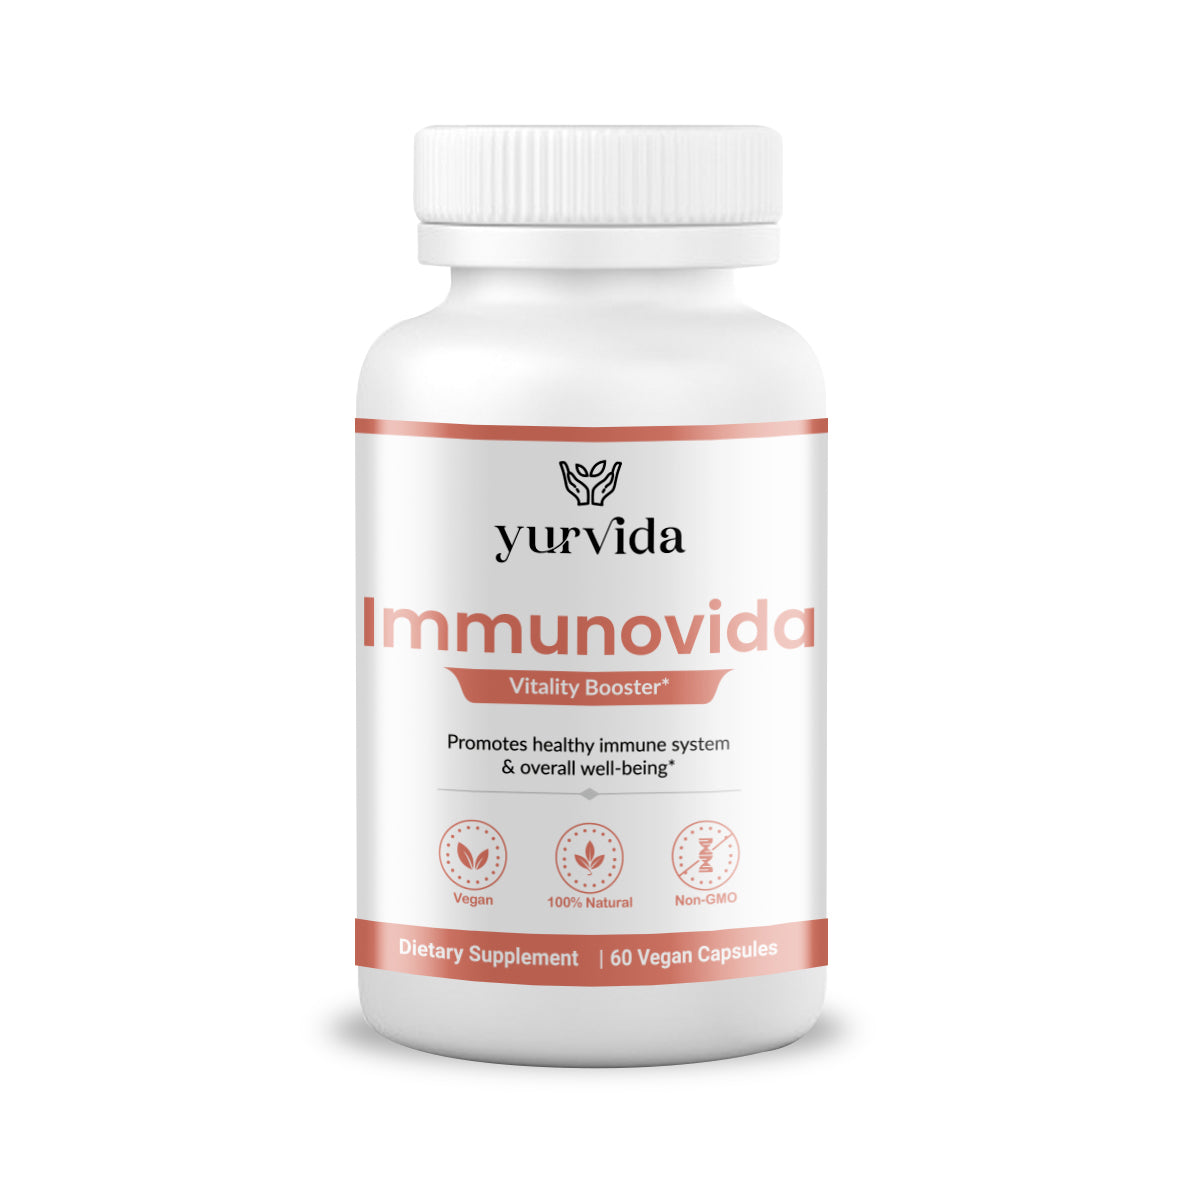 Immunovida - Expert Formulation to Promote Healthy Immune System*